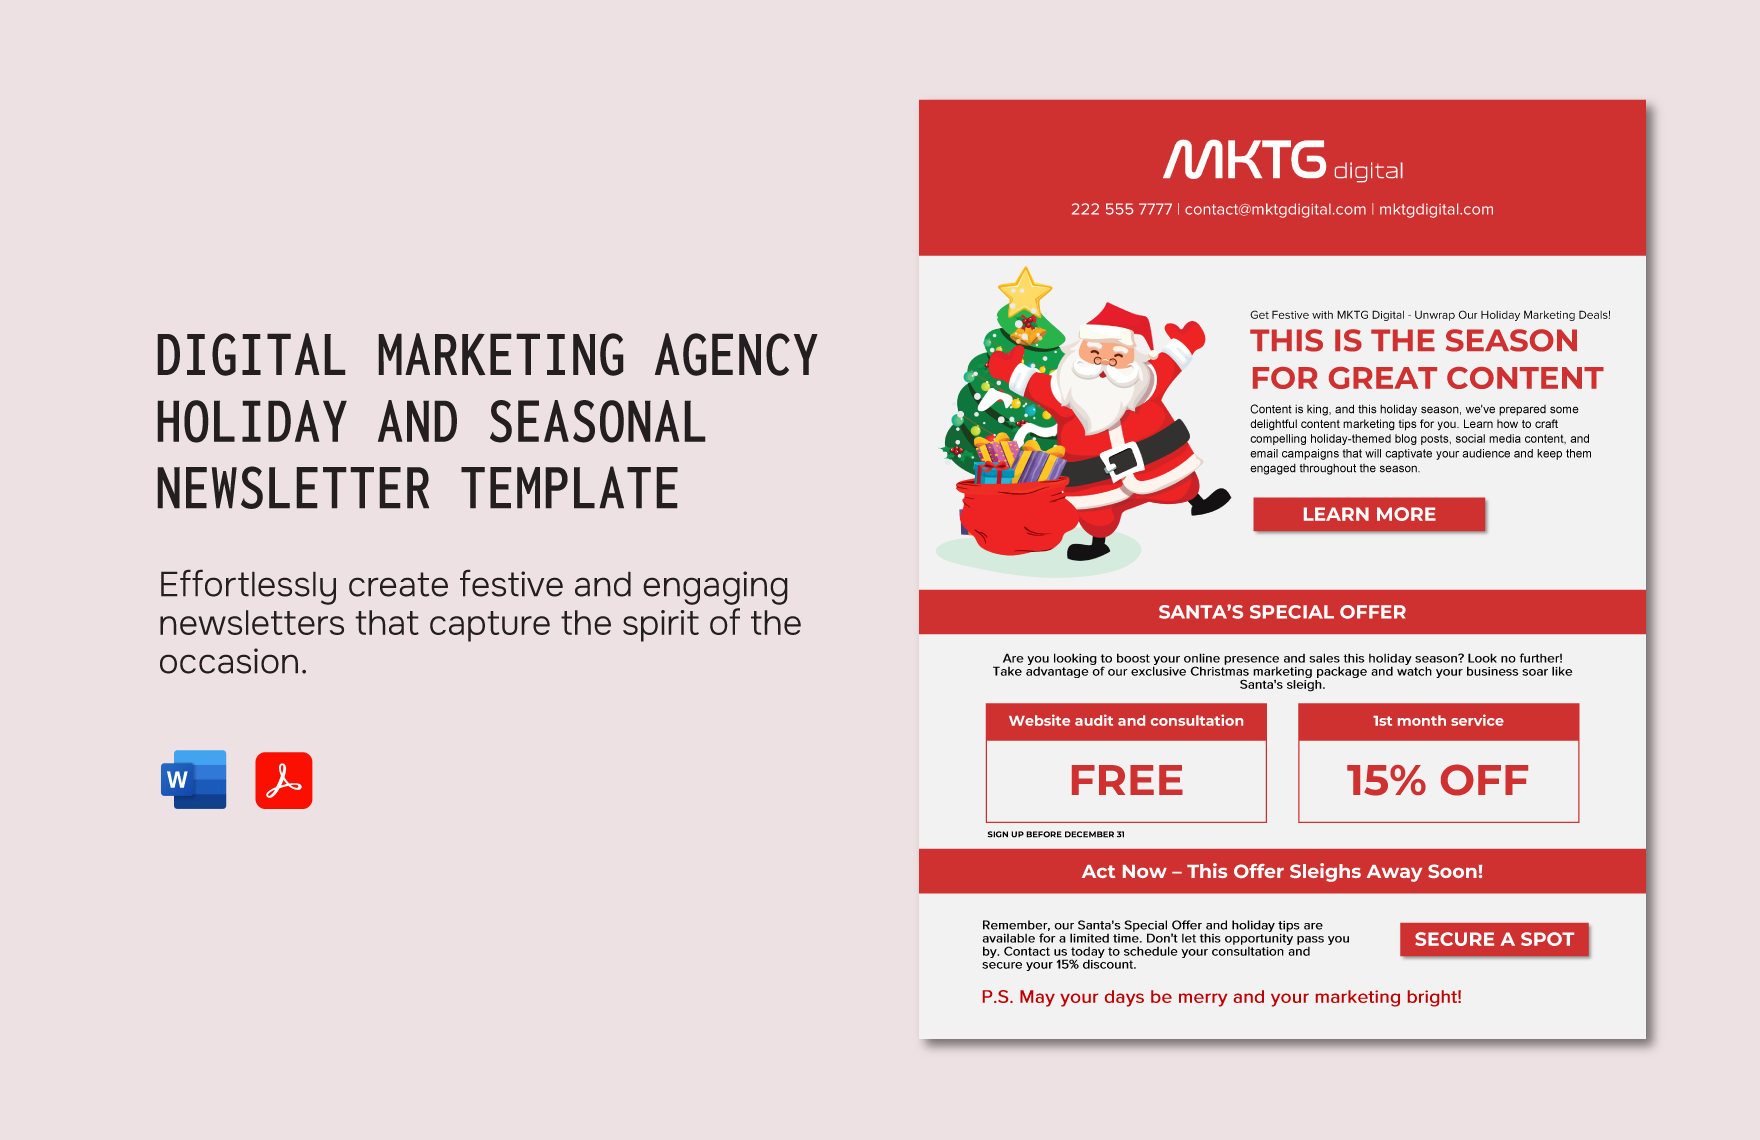 Digital Marketing Agency Holiday and Seasonal Newsletter Template